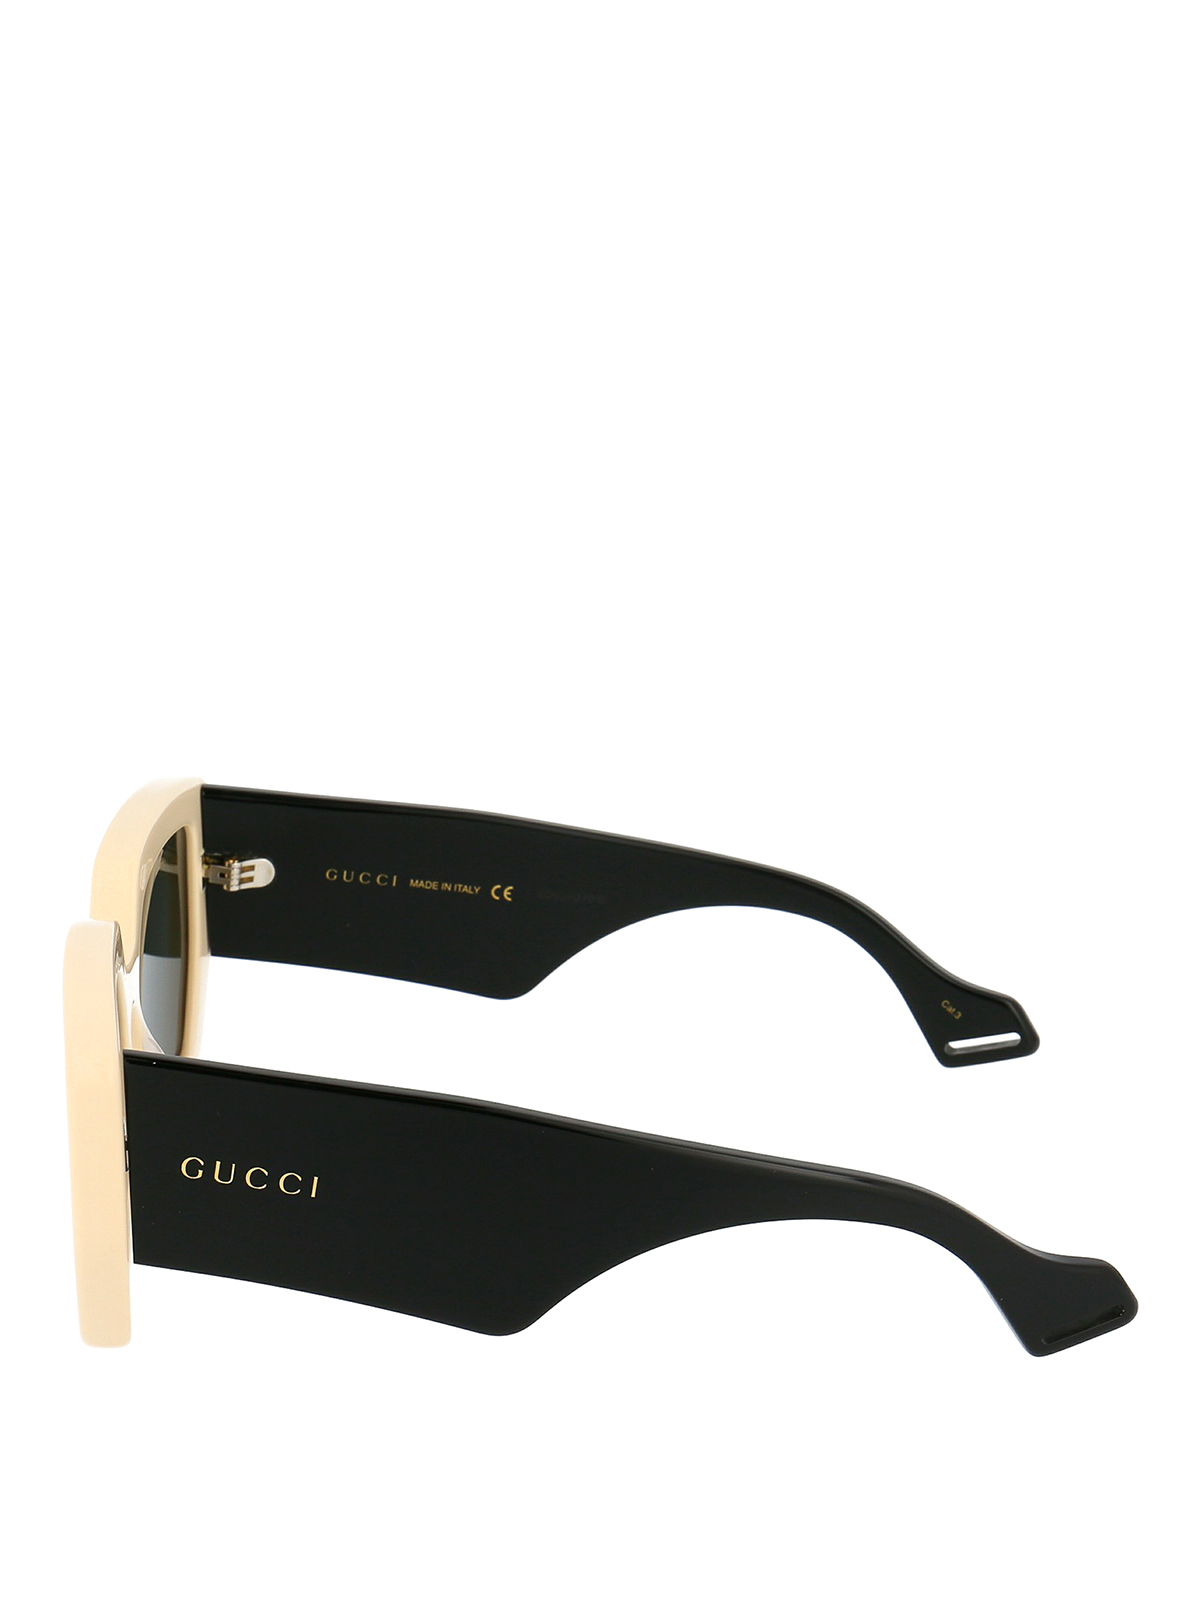 gucci sunglasses herren